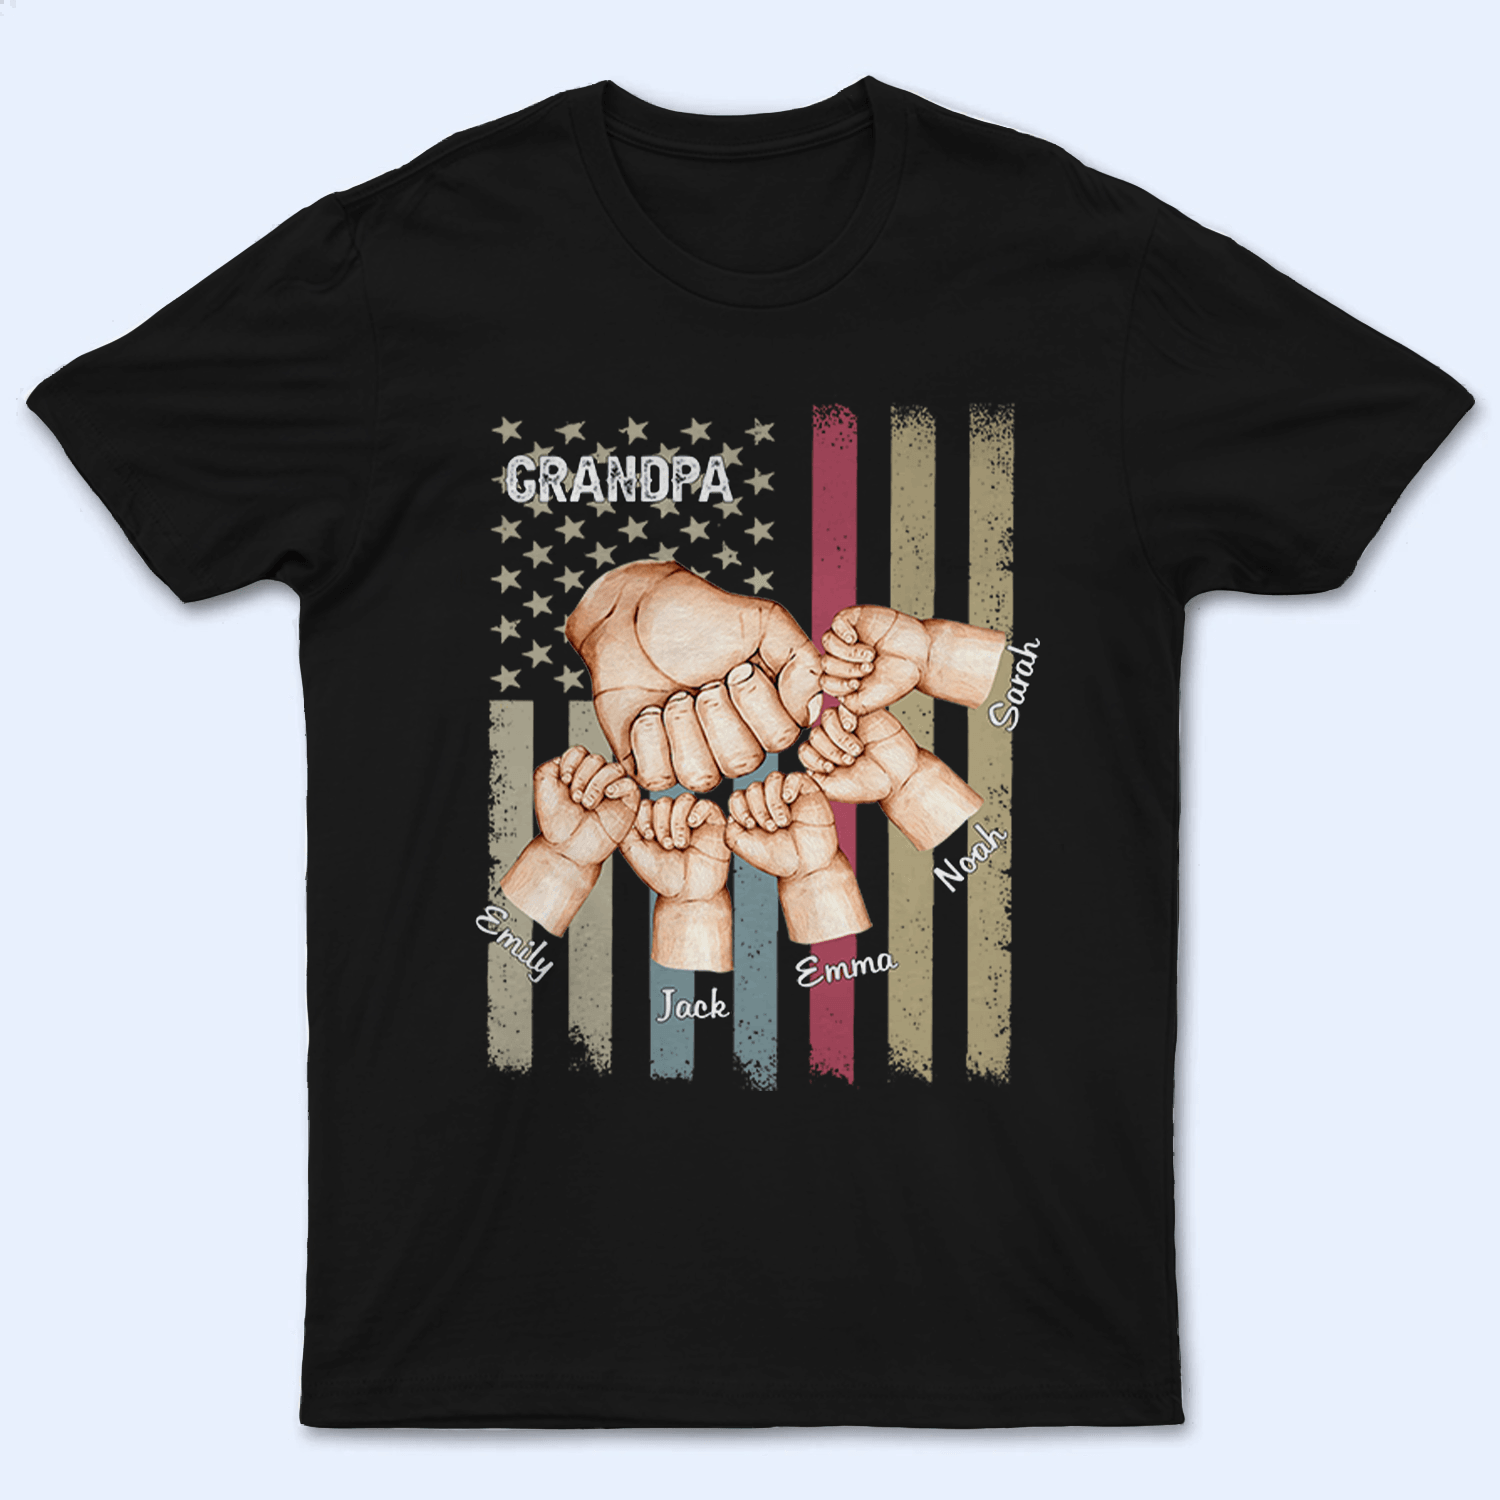 Grandpa Fist Bump - Personalized Custom T Shirt - Birthday, Loving, Funny Gift for Fathers/Dad/Papa/Grandpa